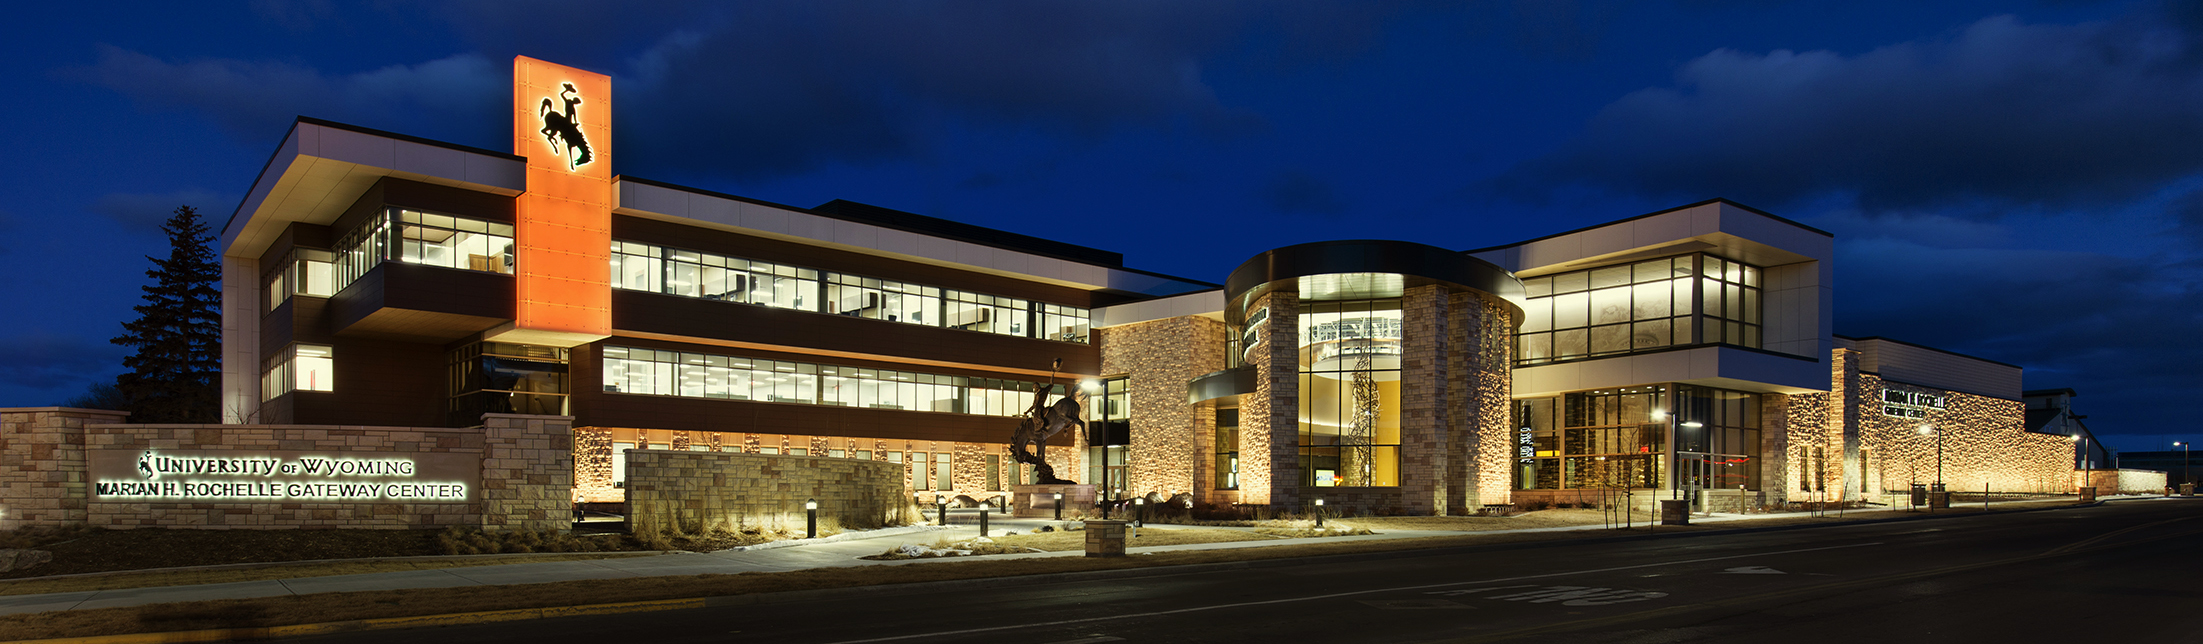 Image of Gateway Center at night